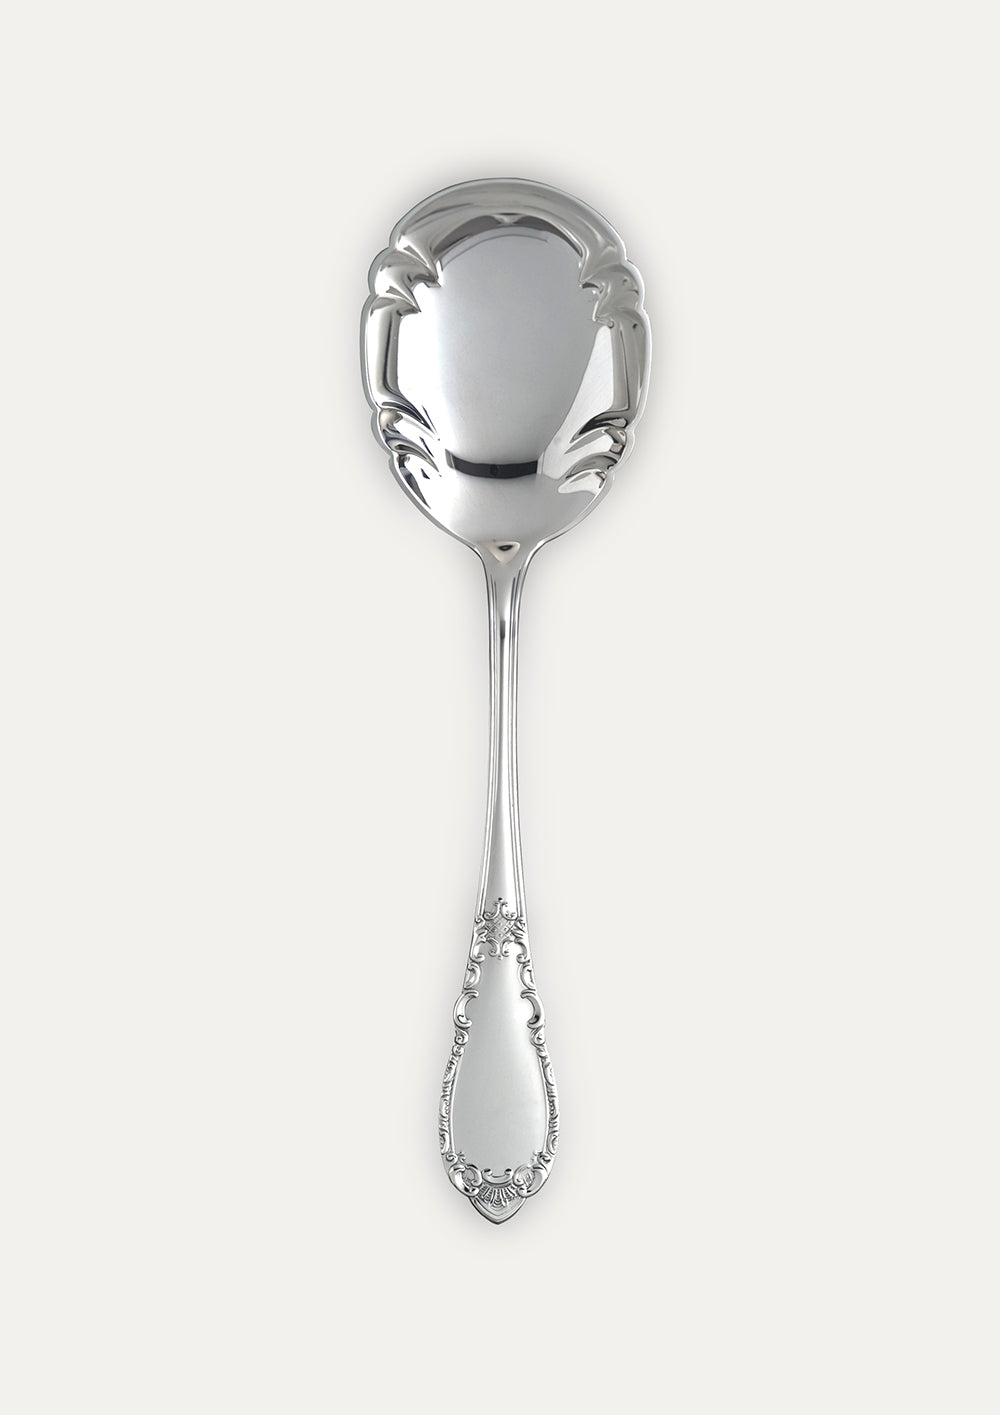 Noble potato spoon